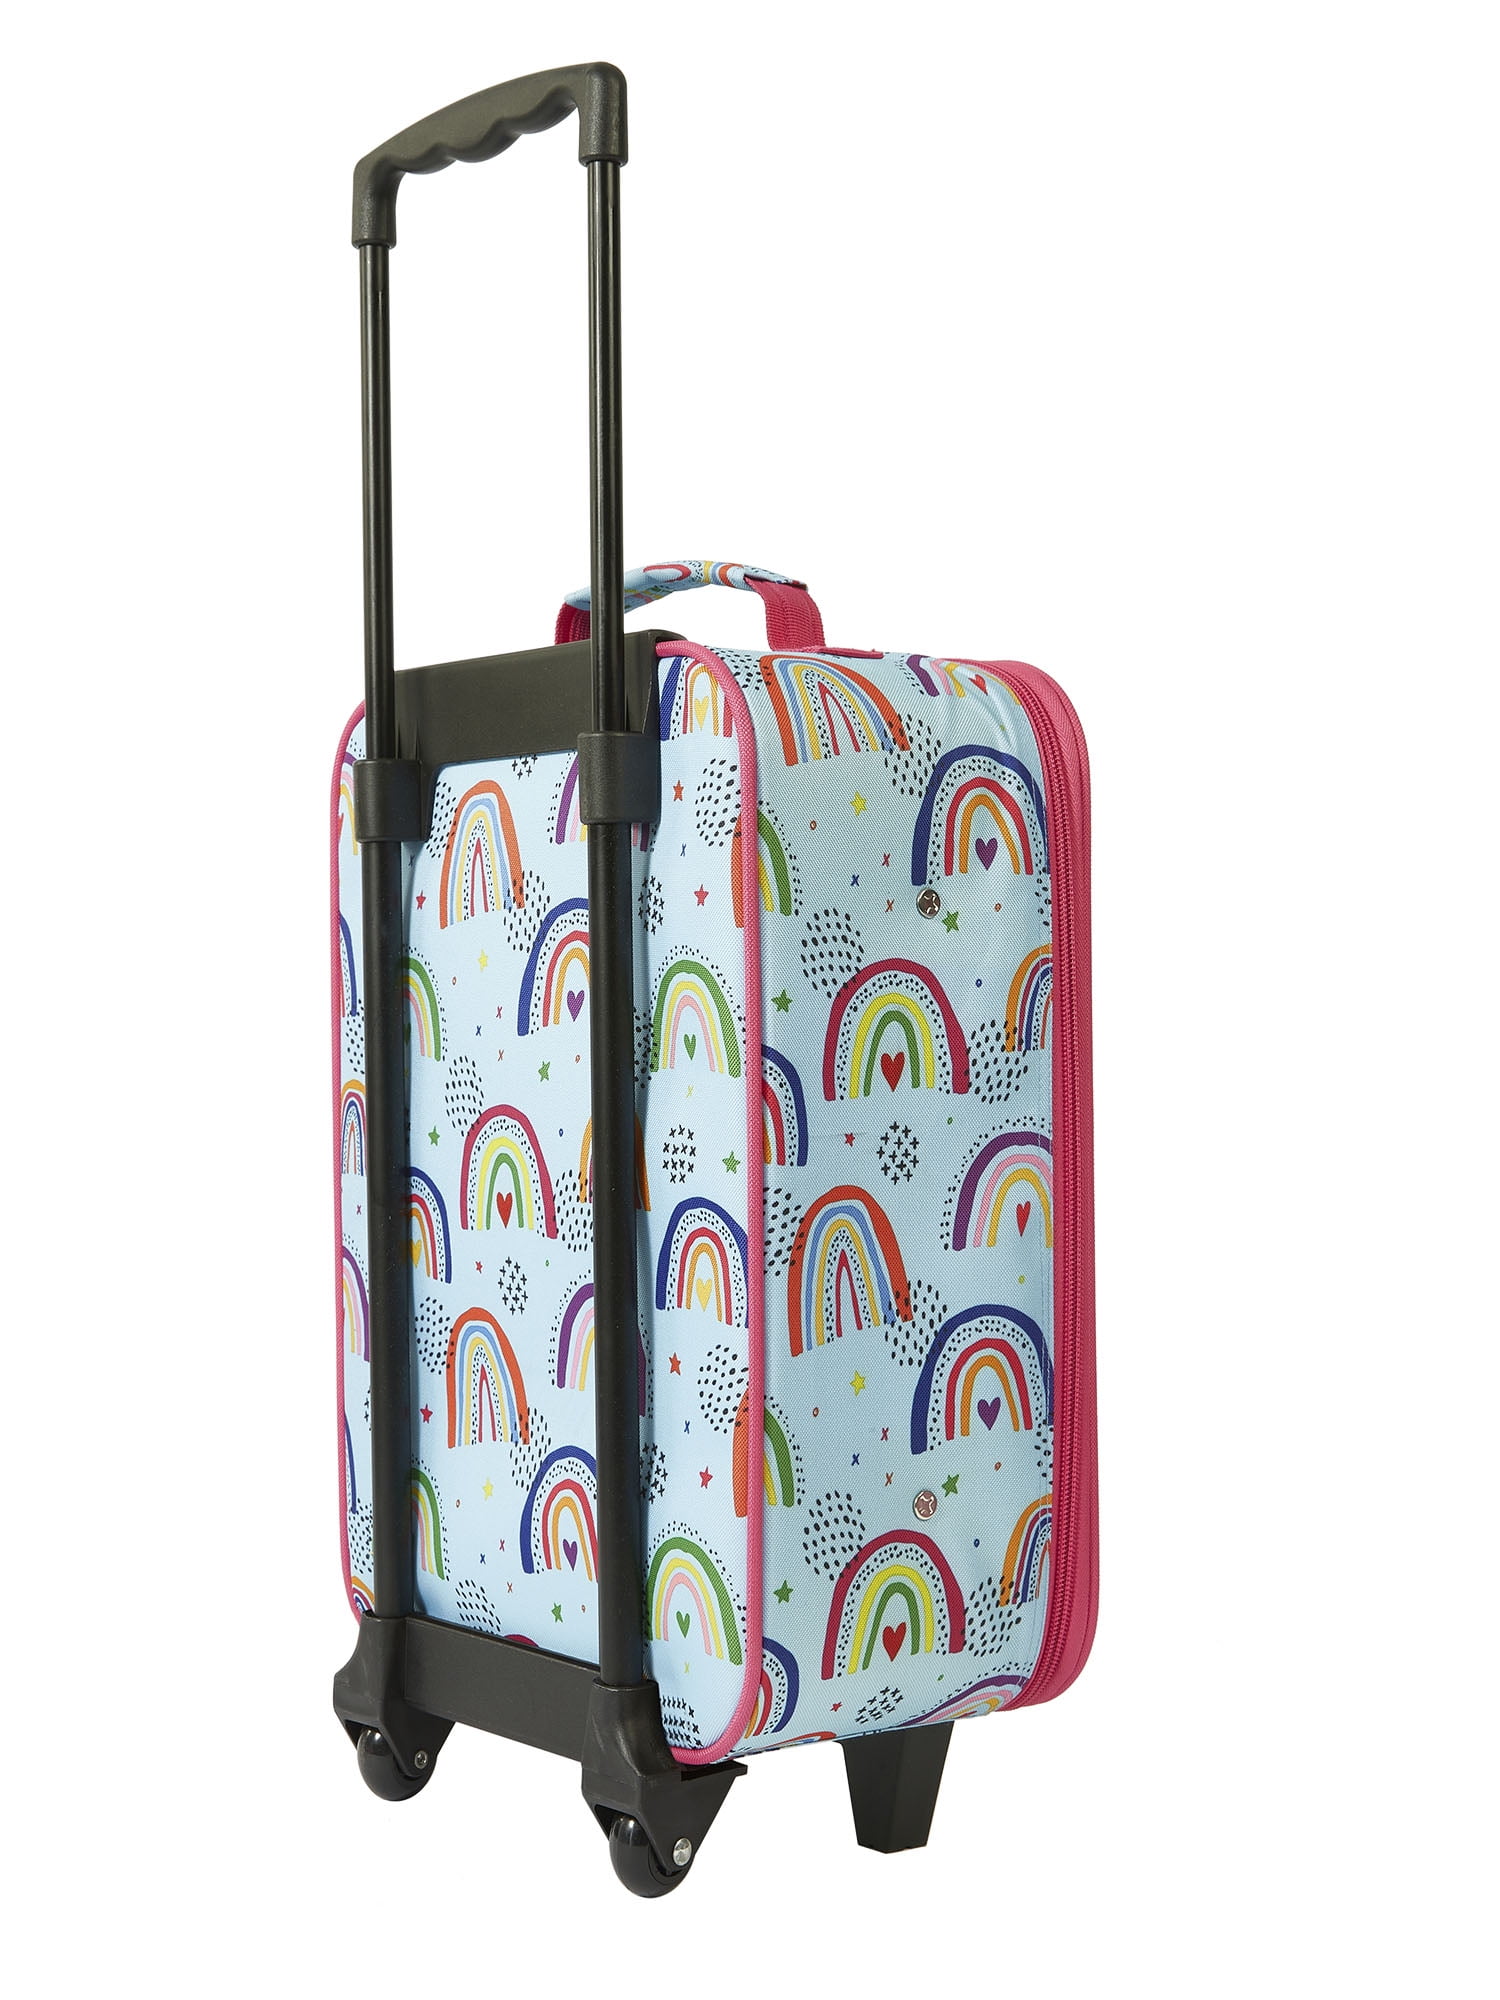 Protege 3 Piece 18 Softside Kids Luggage Set, Dinosaur 